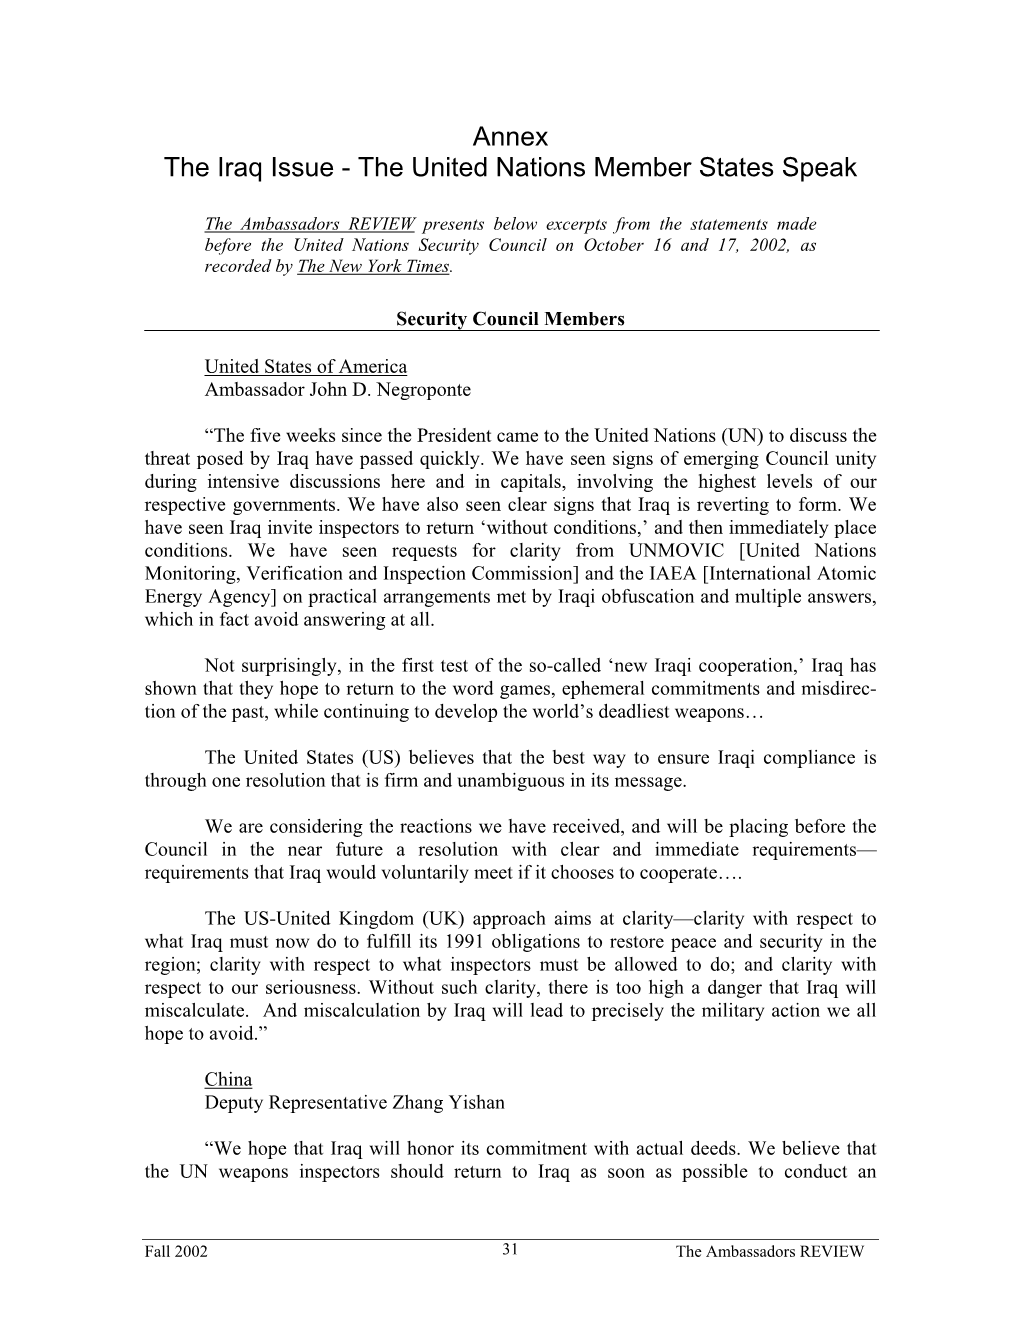 Annex the Iraq Issue - the United Nations Member States Speak